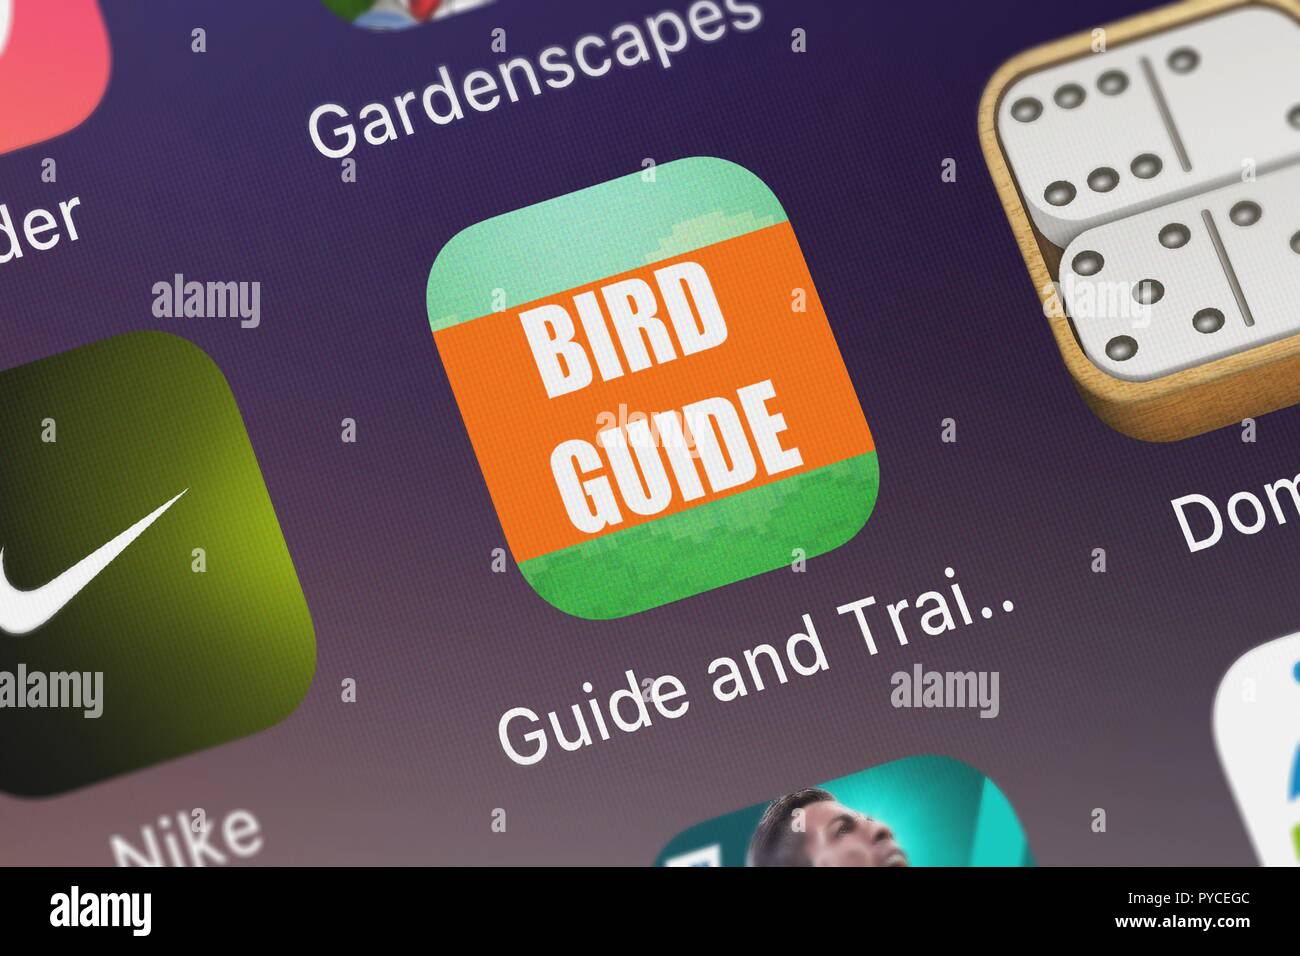 Screenshot of the Flappy Bird game.